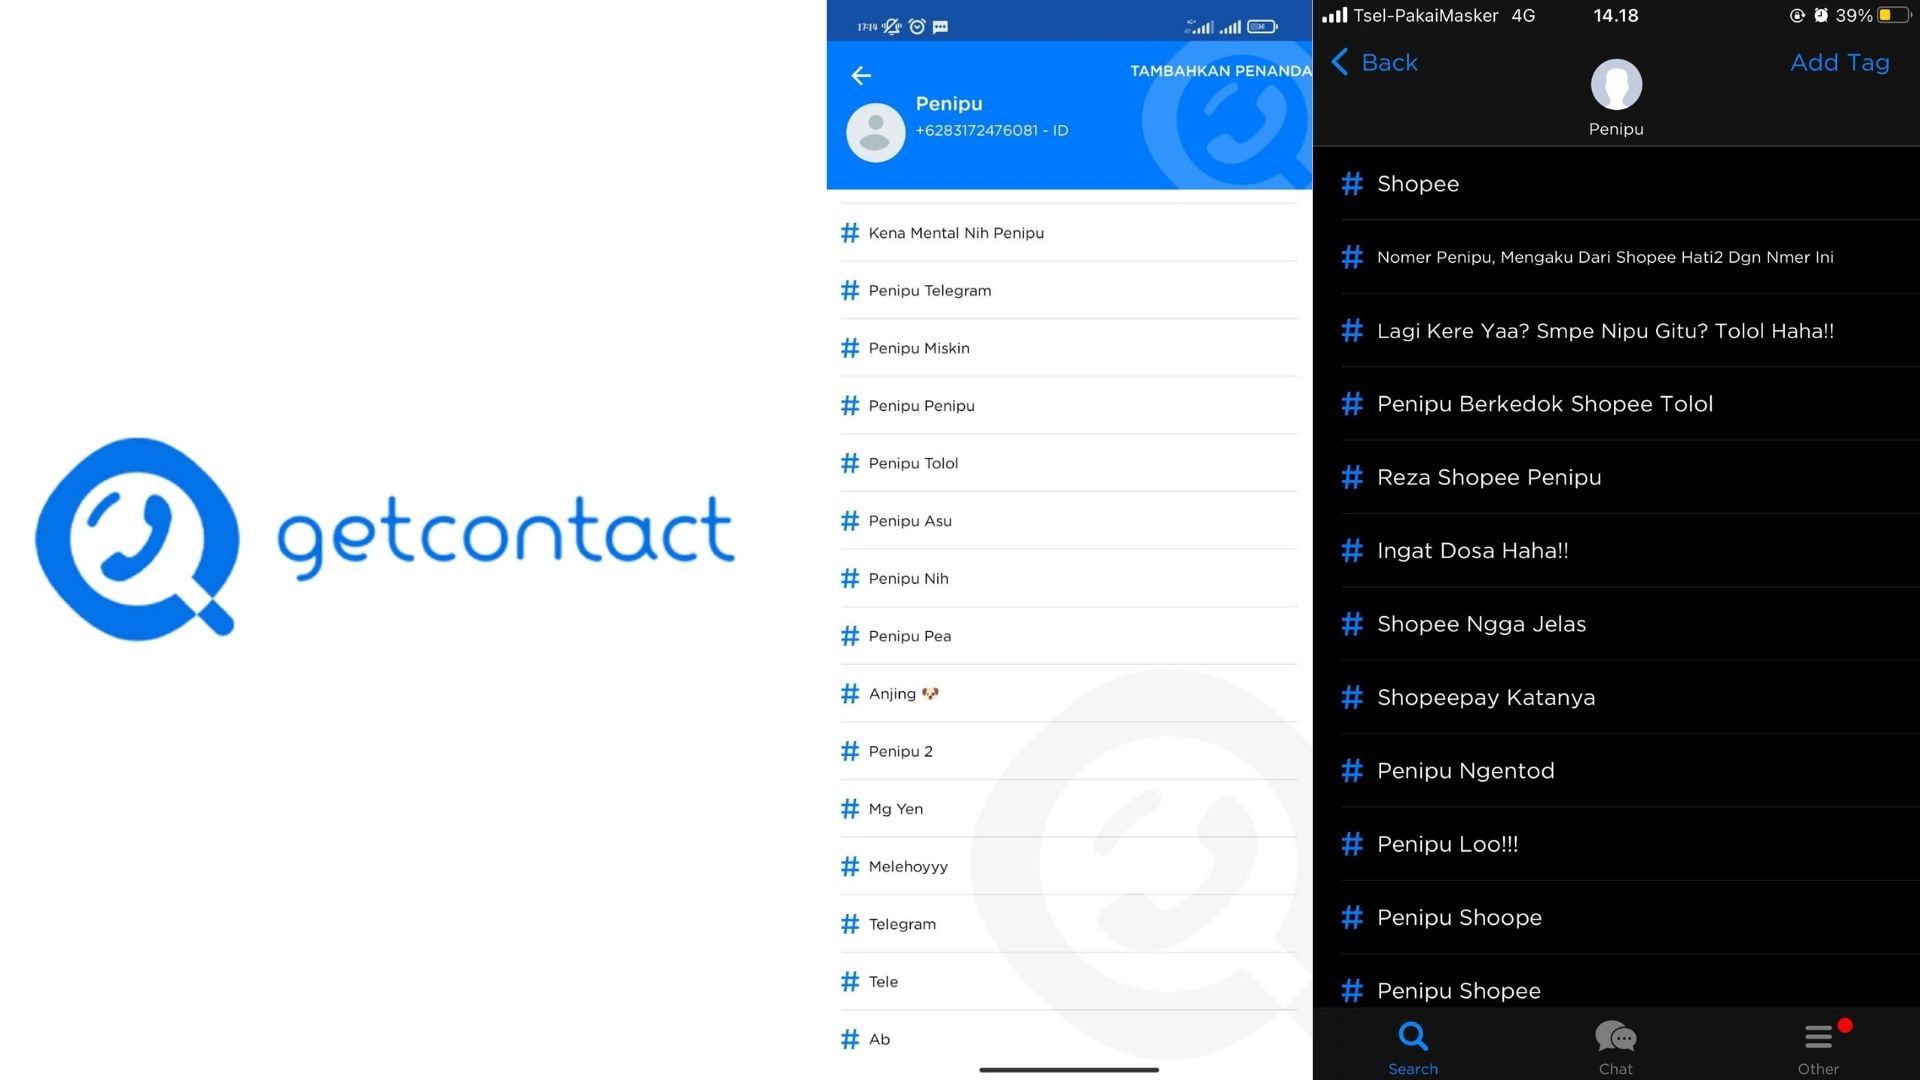 New Aplikasi Get Contact Terbaru 2022: Mengetahui Nomor HP Mencurigakan